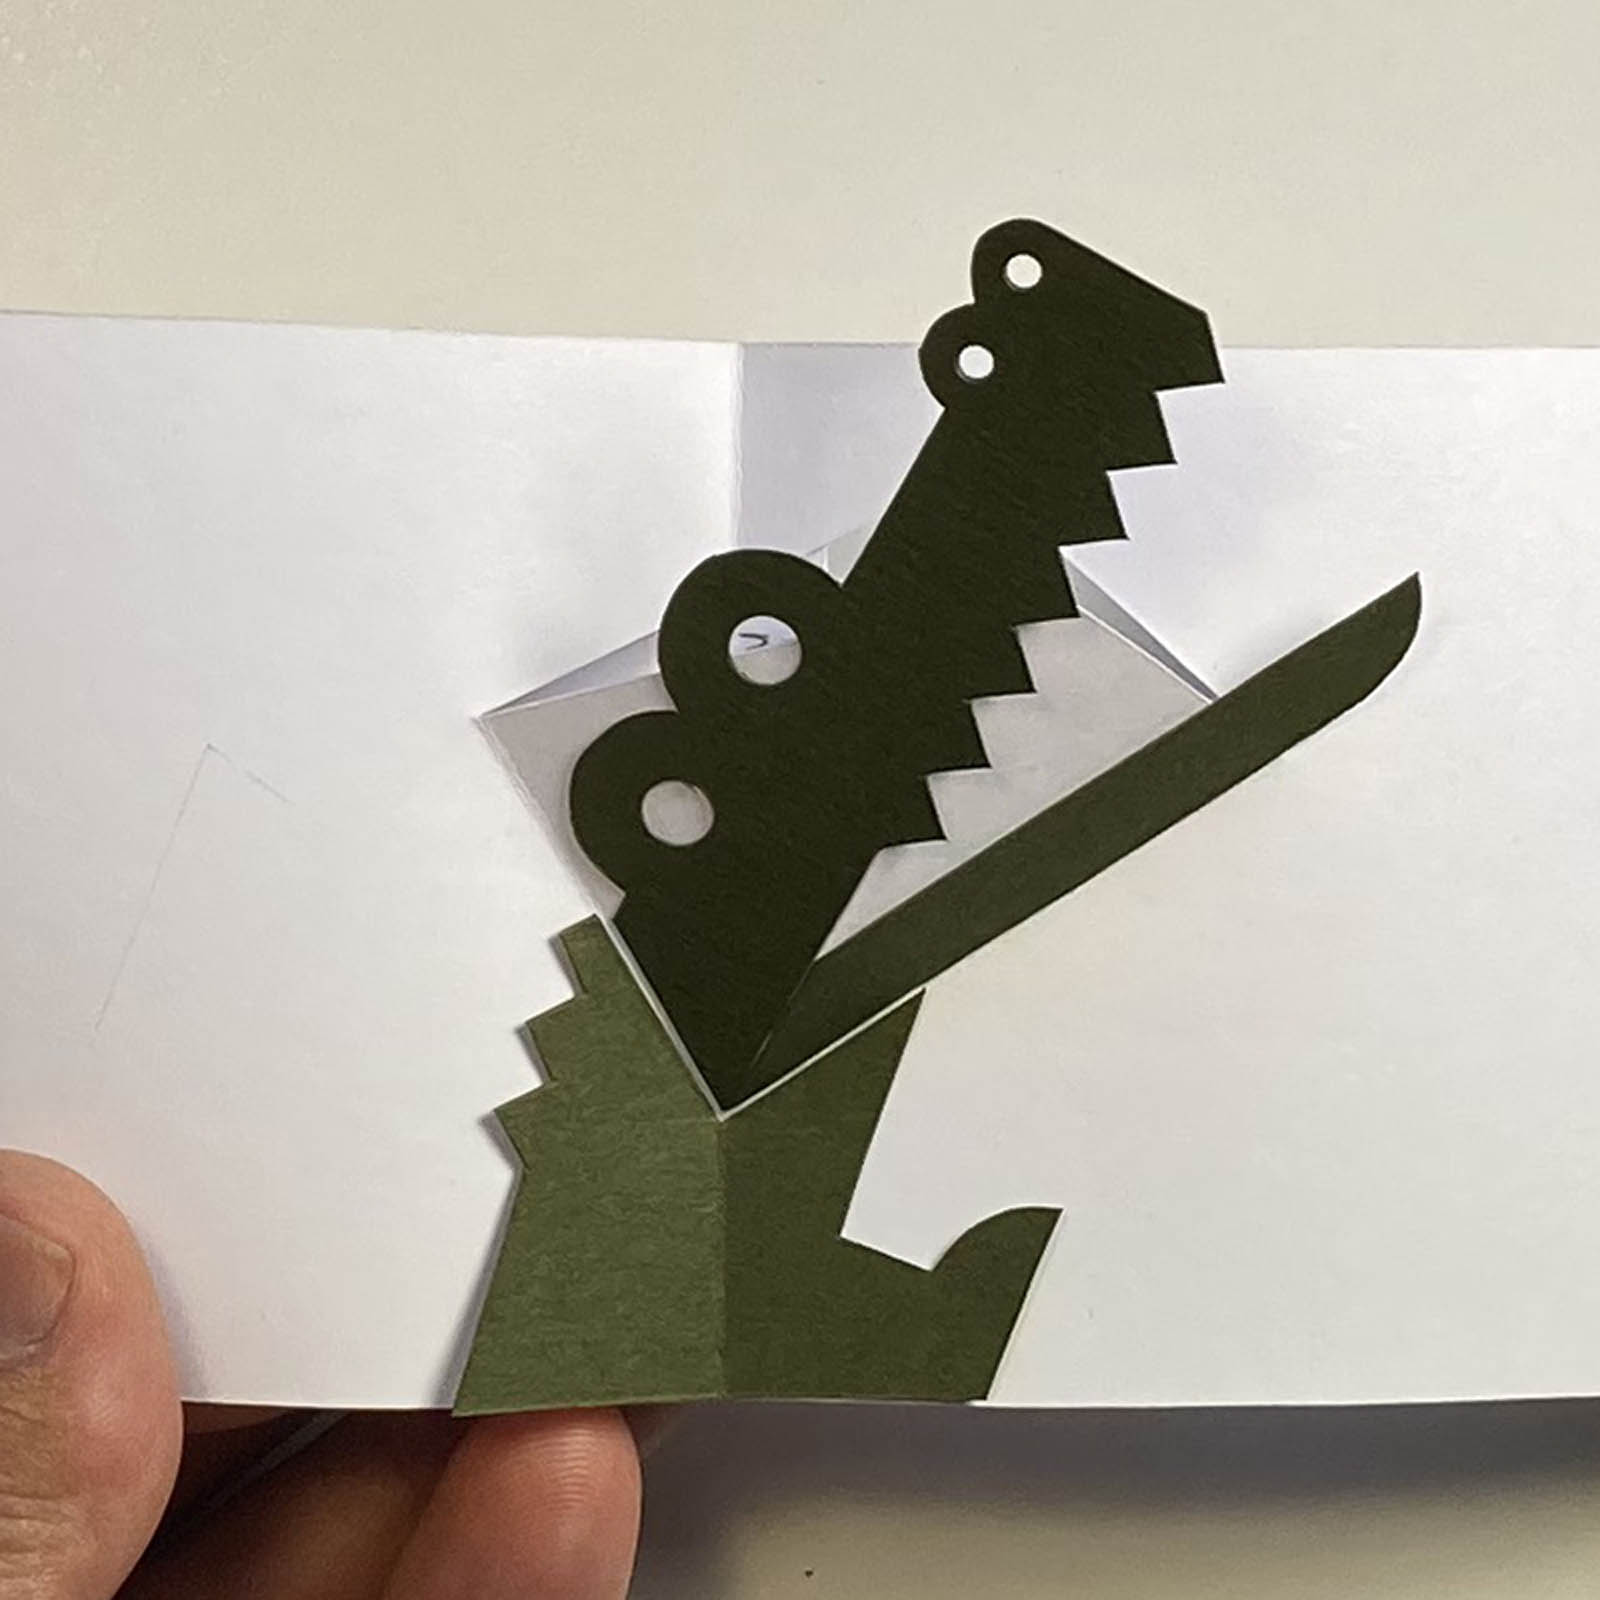 Gator pop-up book by Shawn Sheehy